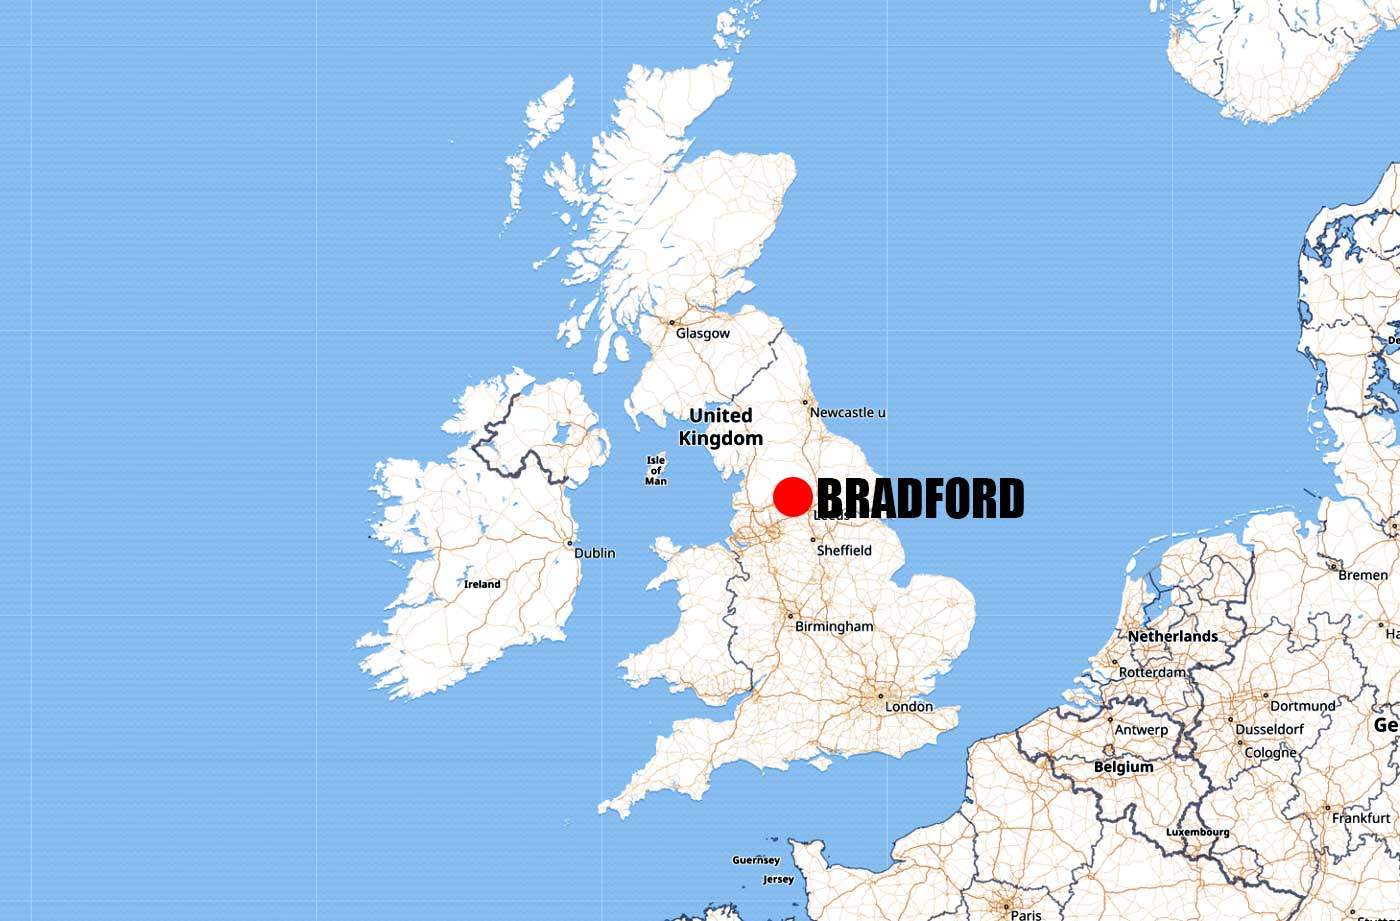 Location of Bradford City on United Kingdom and England Map